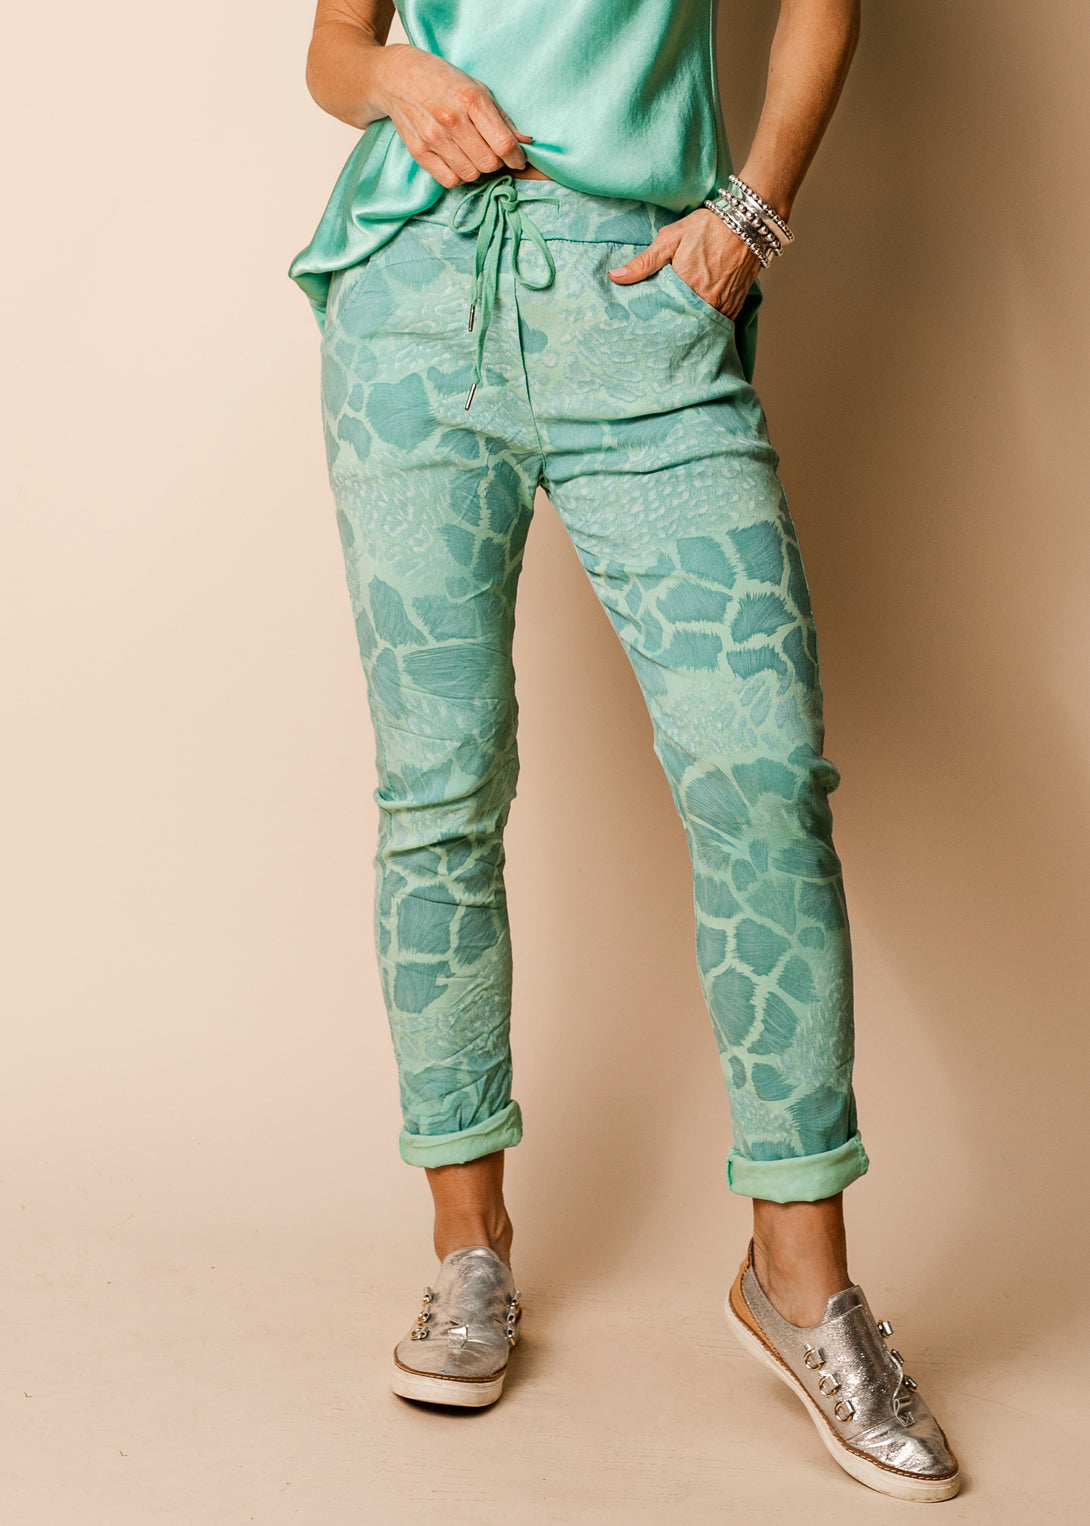 Callow Pants in Sea Green - Imagine Fashion